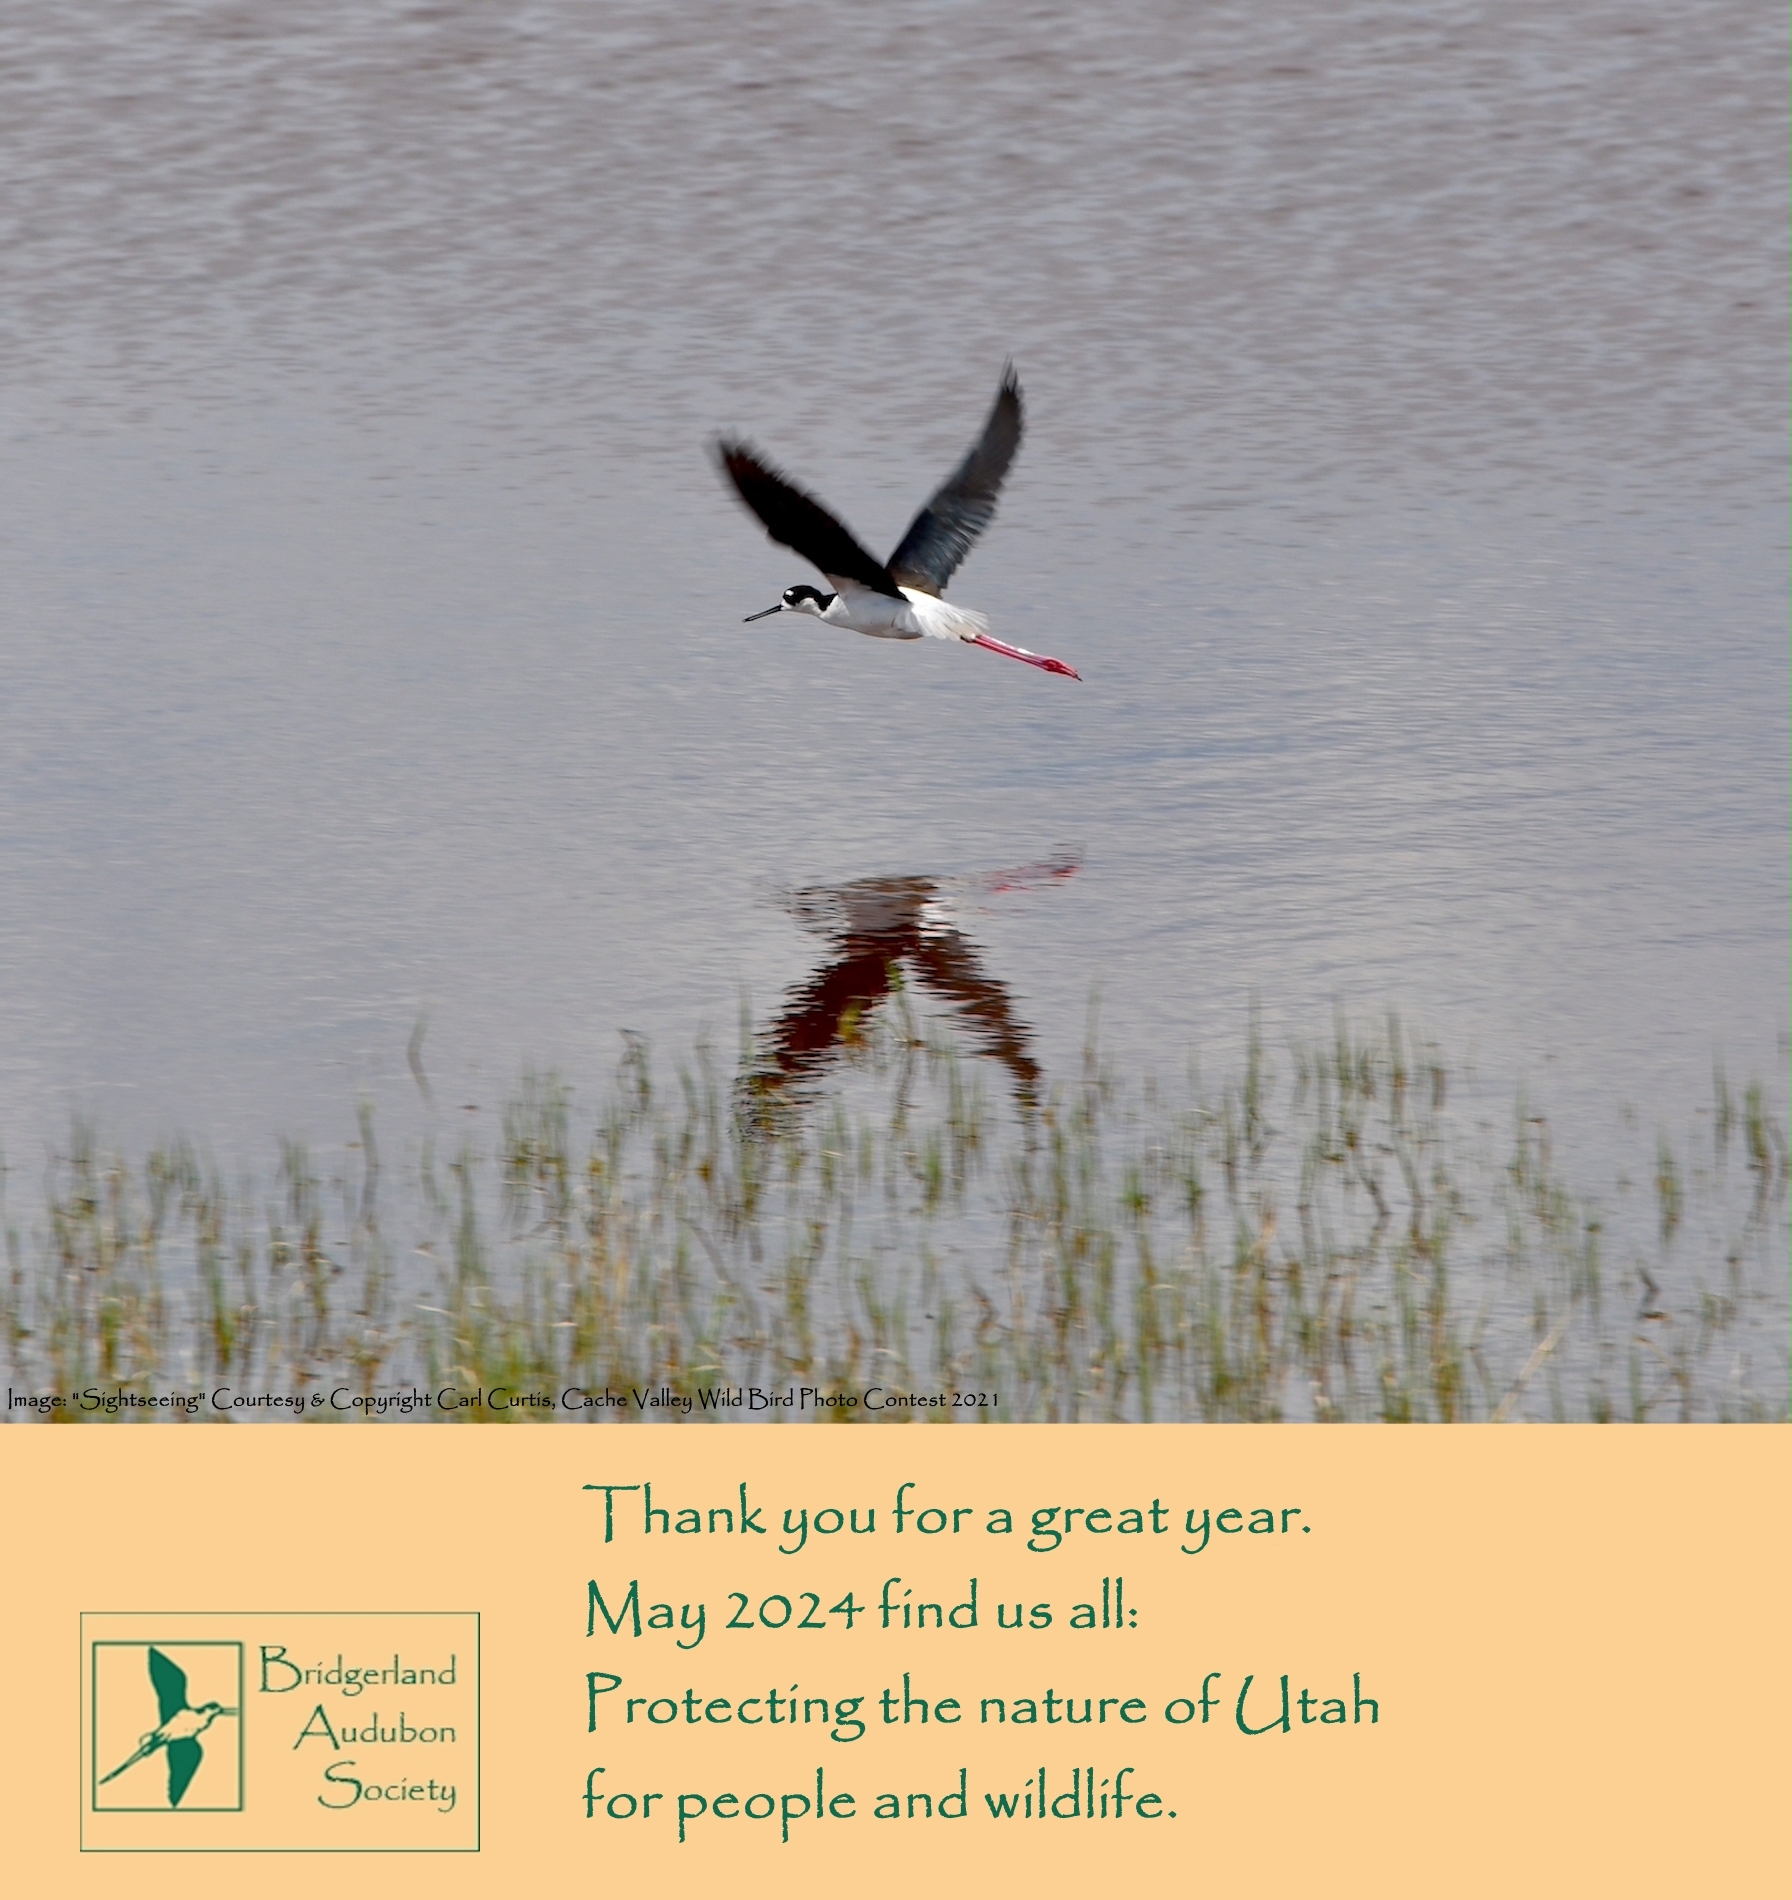 2023 Bridgerland Audubon Thank You Card Image Courtesy & Copyright Carl Curtis, Cache Valley Photo Contest